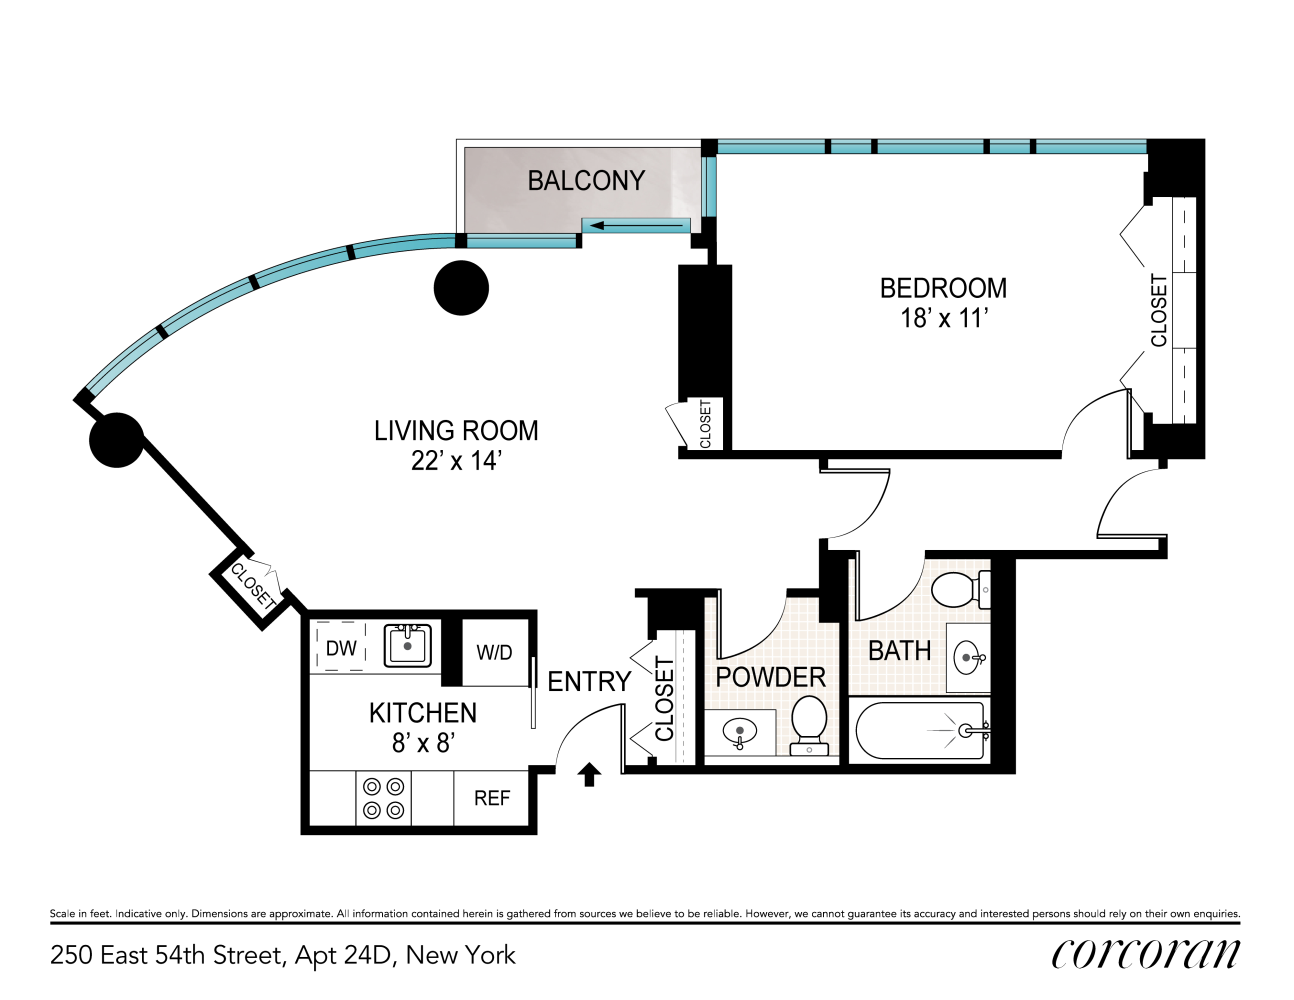 Floorplan for 250 East 54th Street, 24D